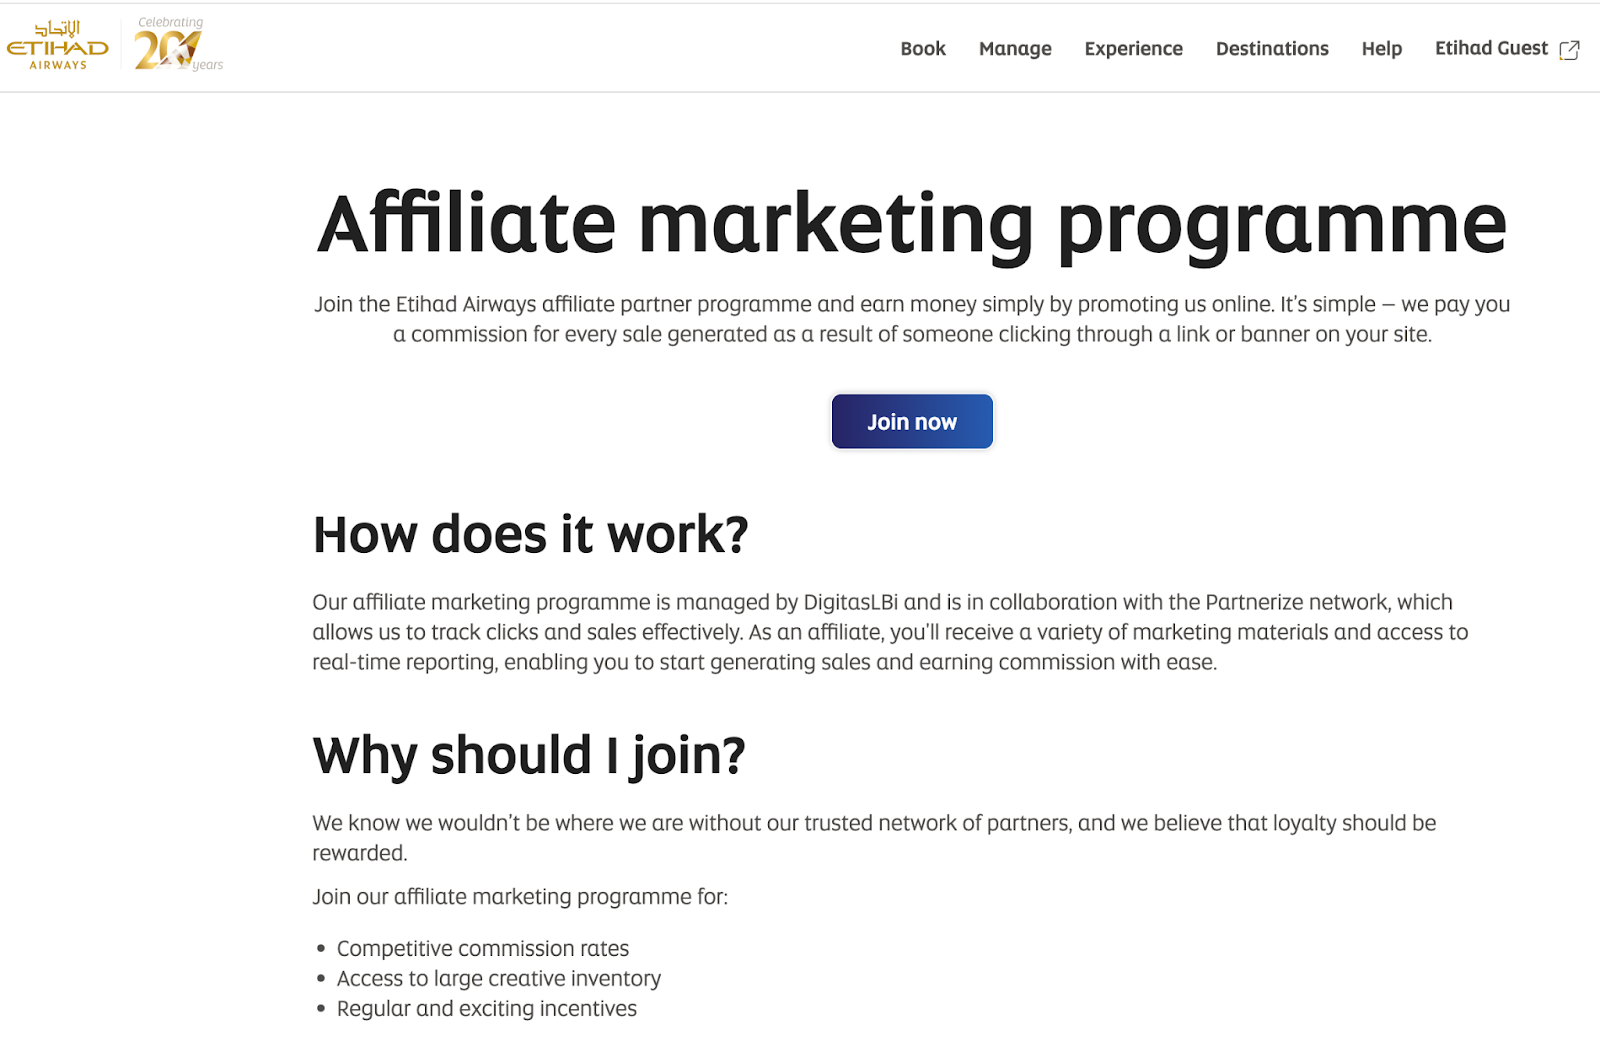 Etihad's affiliate partner program page on their website